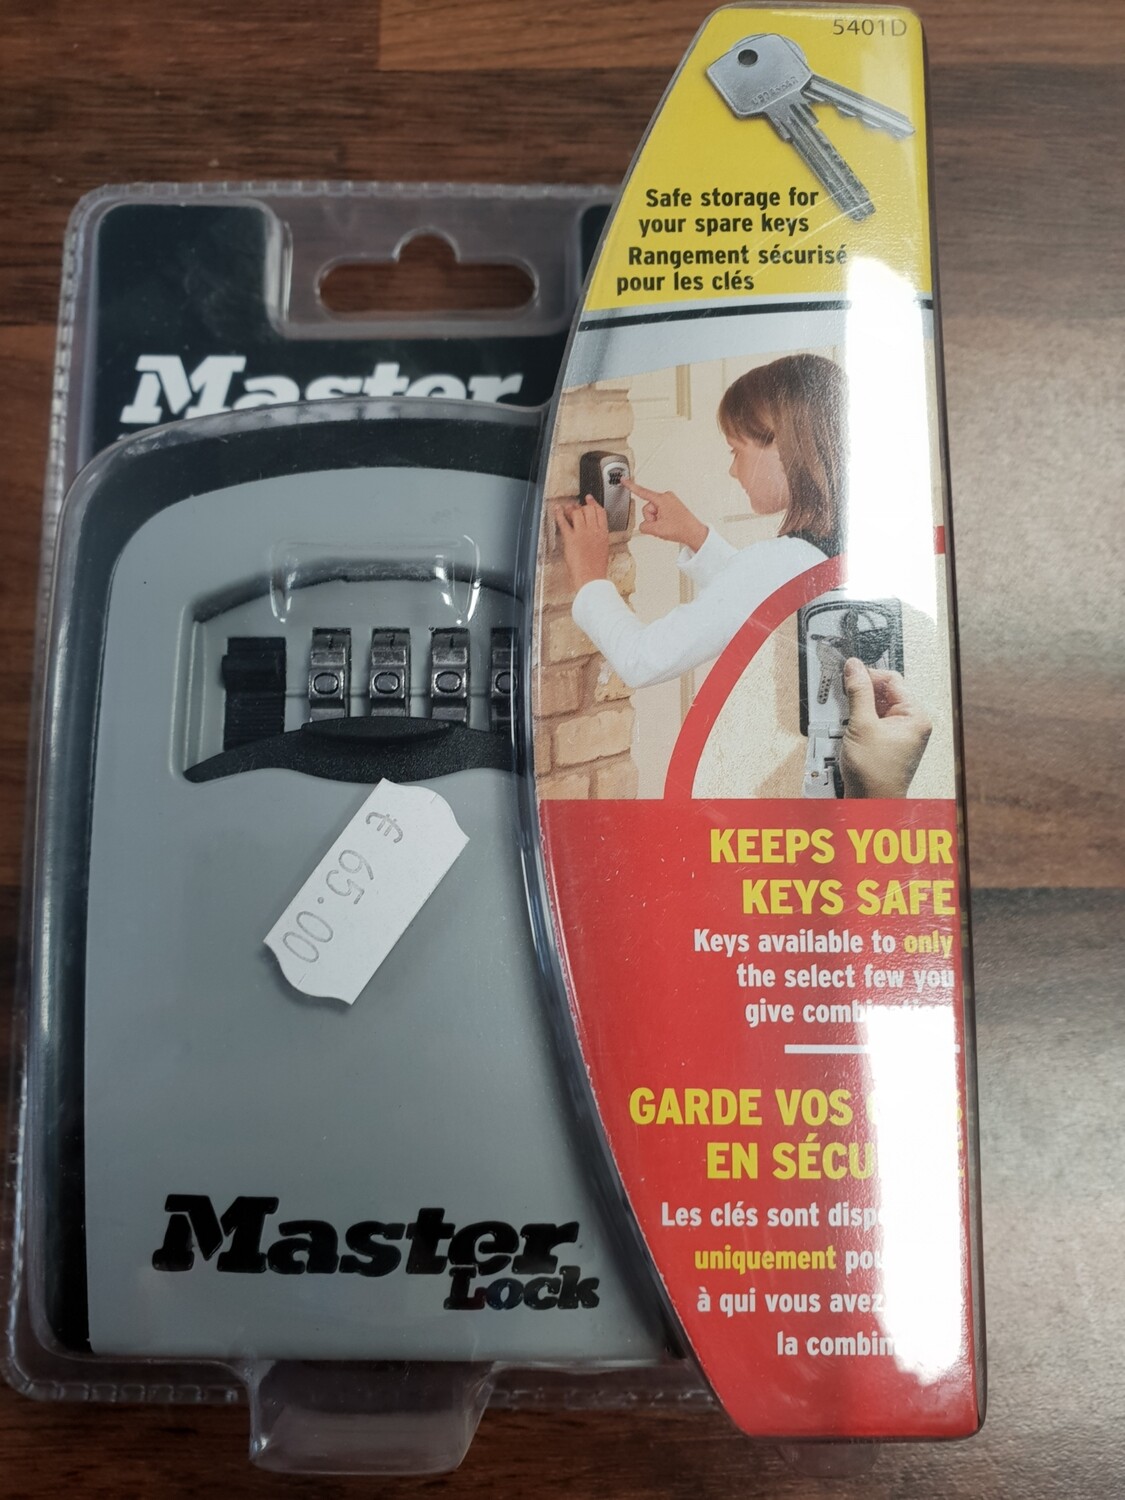 Master lock key safe